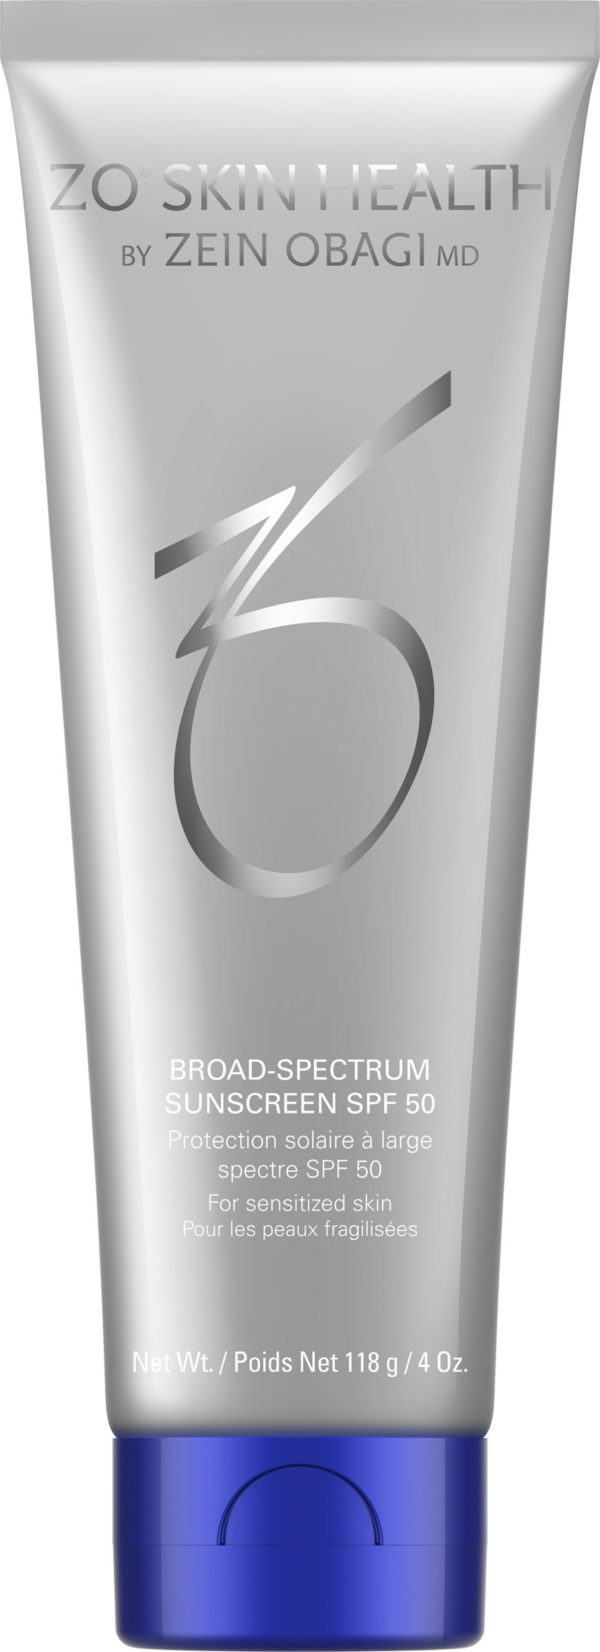 Broad Spectrum Sunscreen SPF 50 | ZO Skin Health | ZGT helon